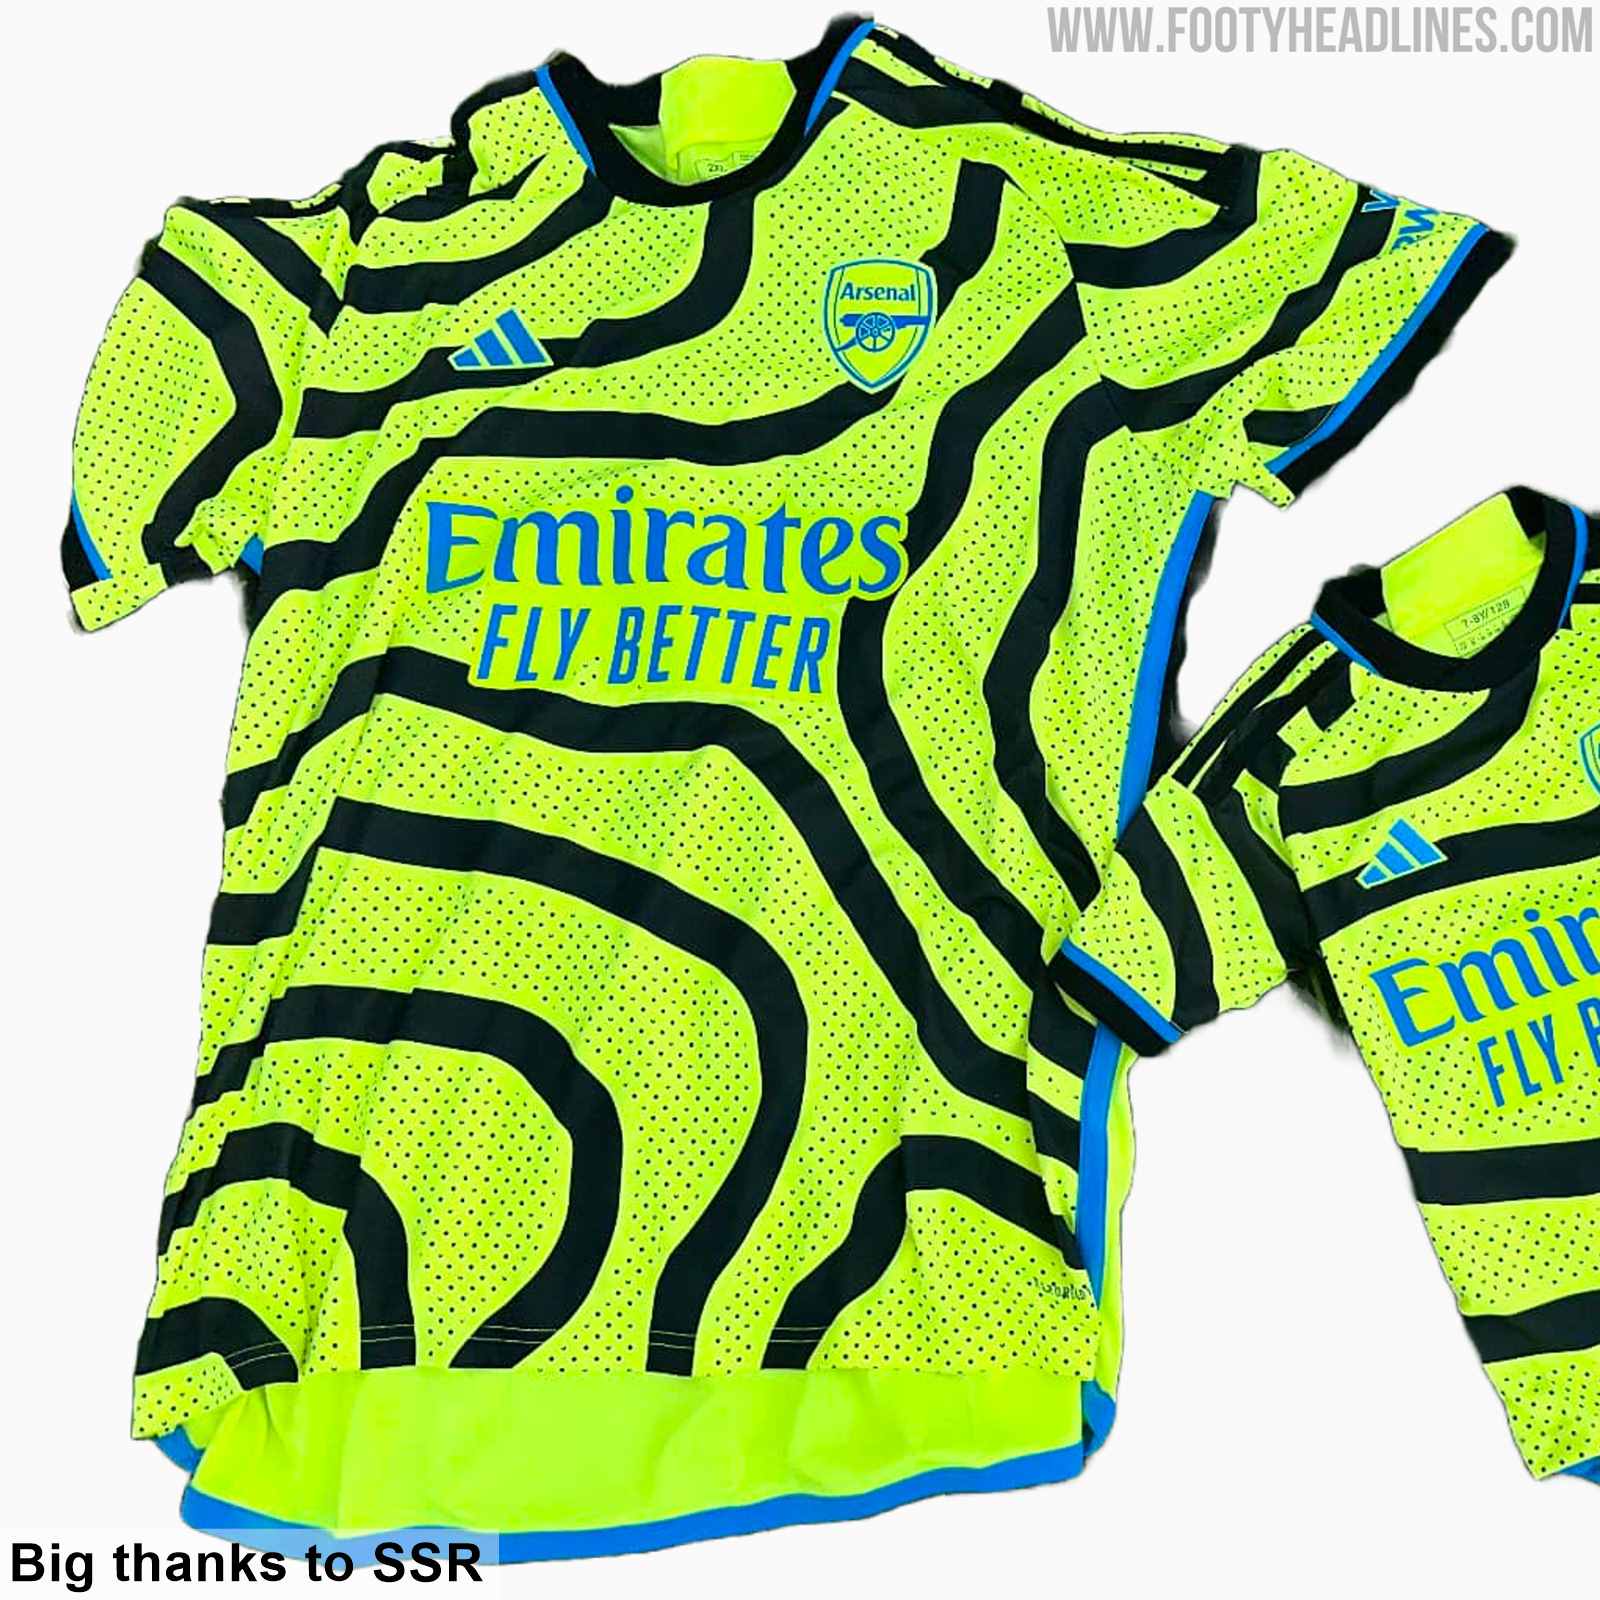 Adidas Arsenal 23-24 Lifestyler Third Kit Leaked - Footy Headlines